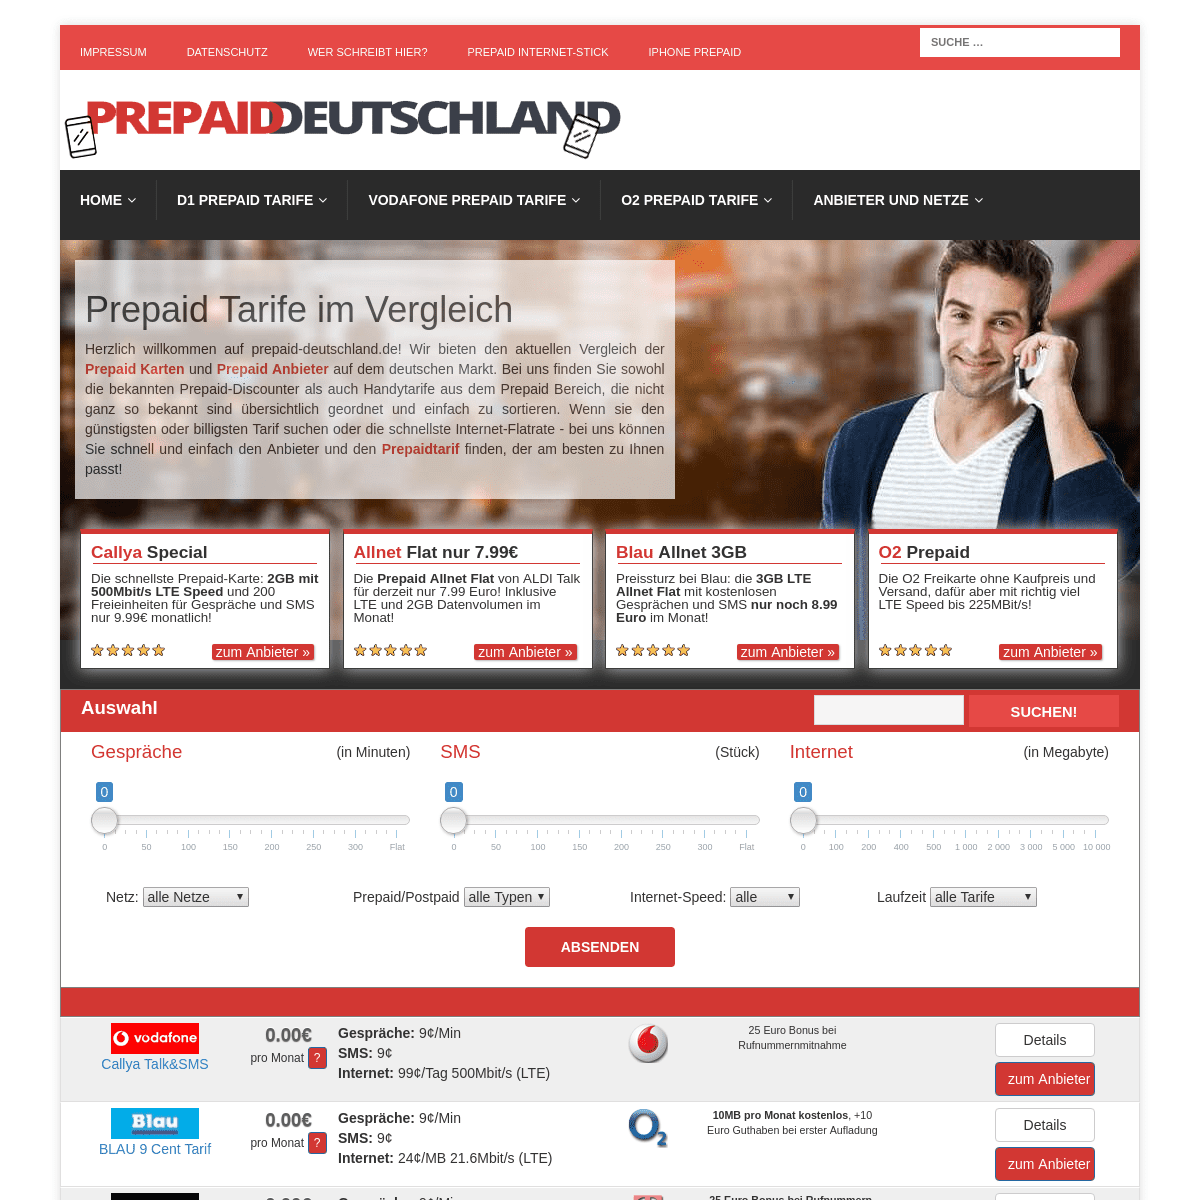 A complete backup of prepaid-deutschland.de